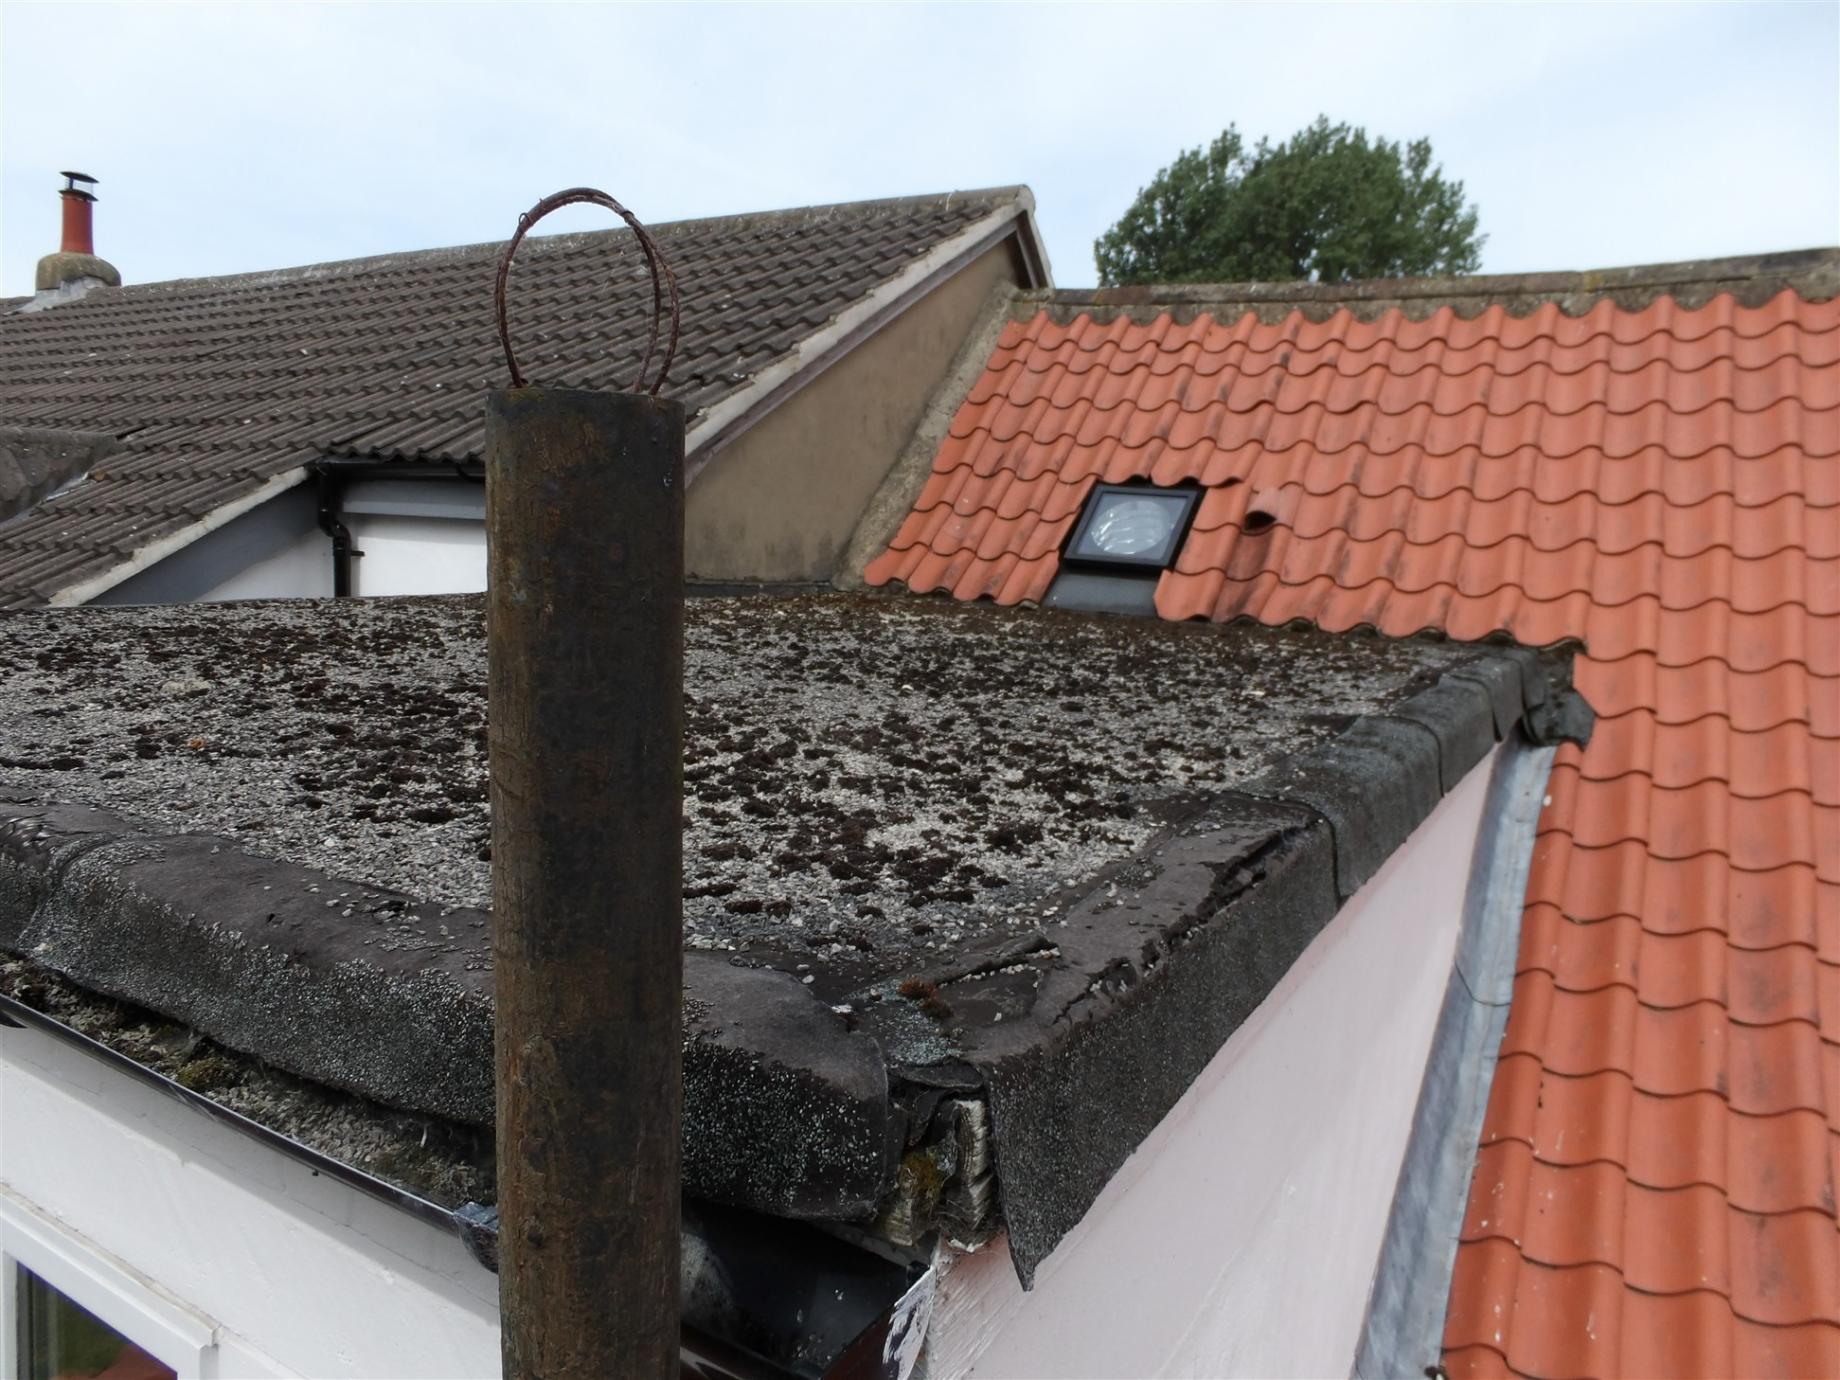 Deterioration to bitumen felt of a flat roof